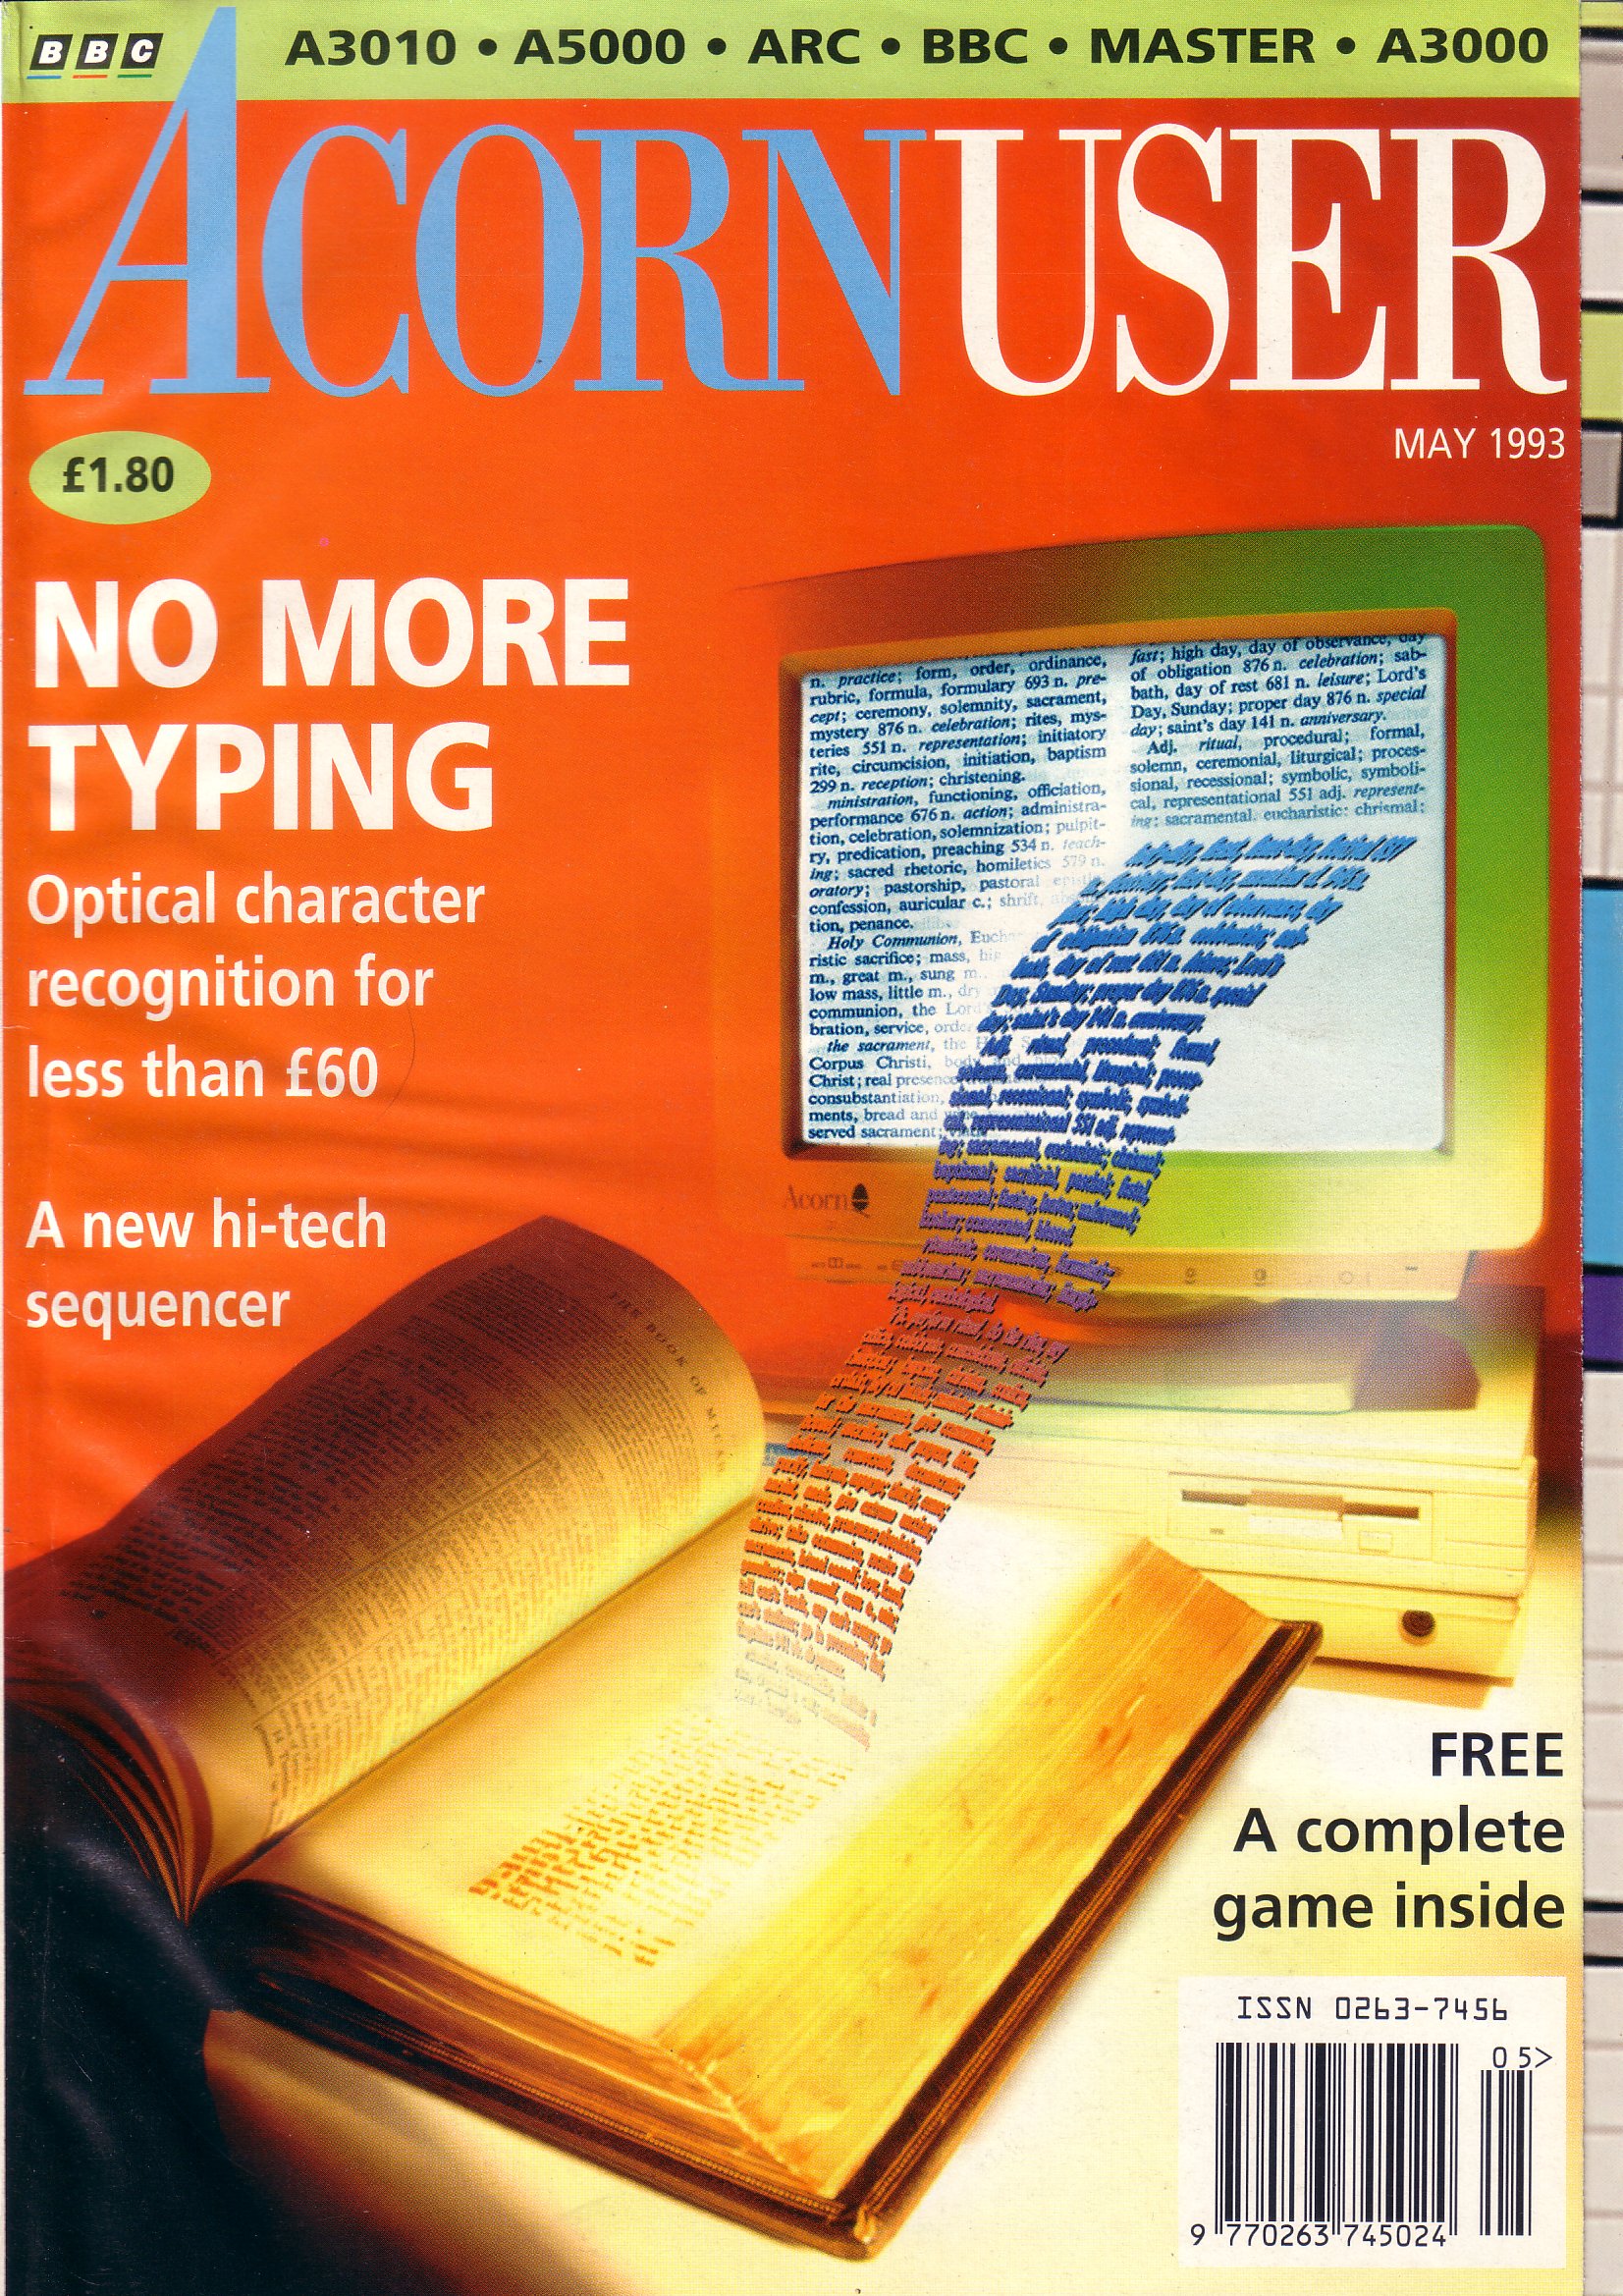 Acorn User - May 1993 cover